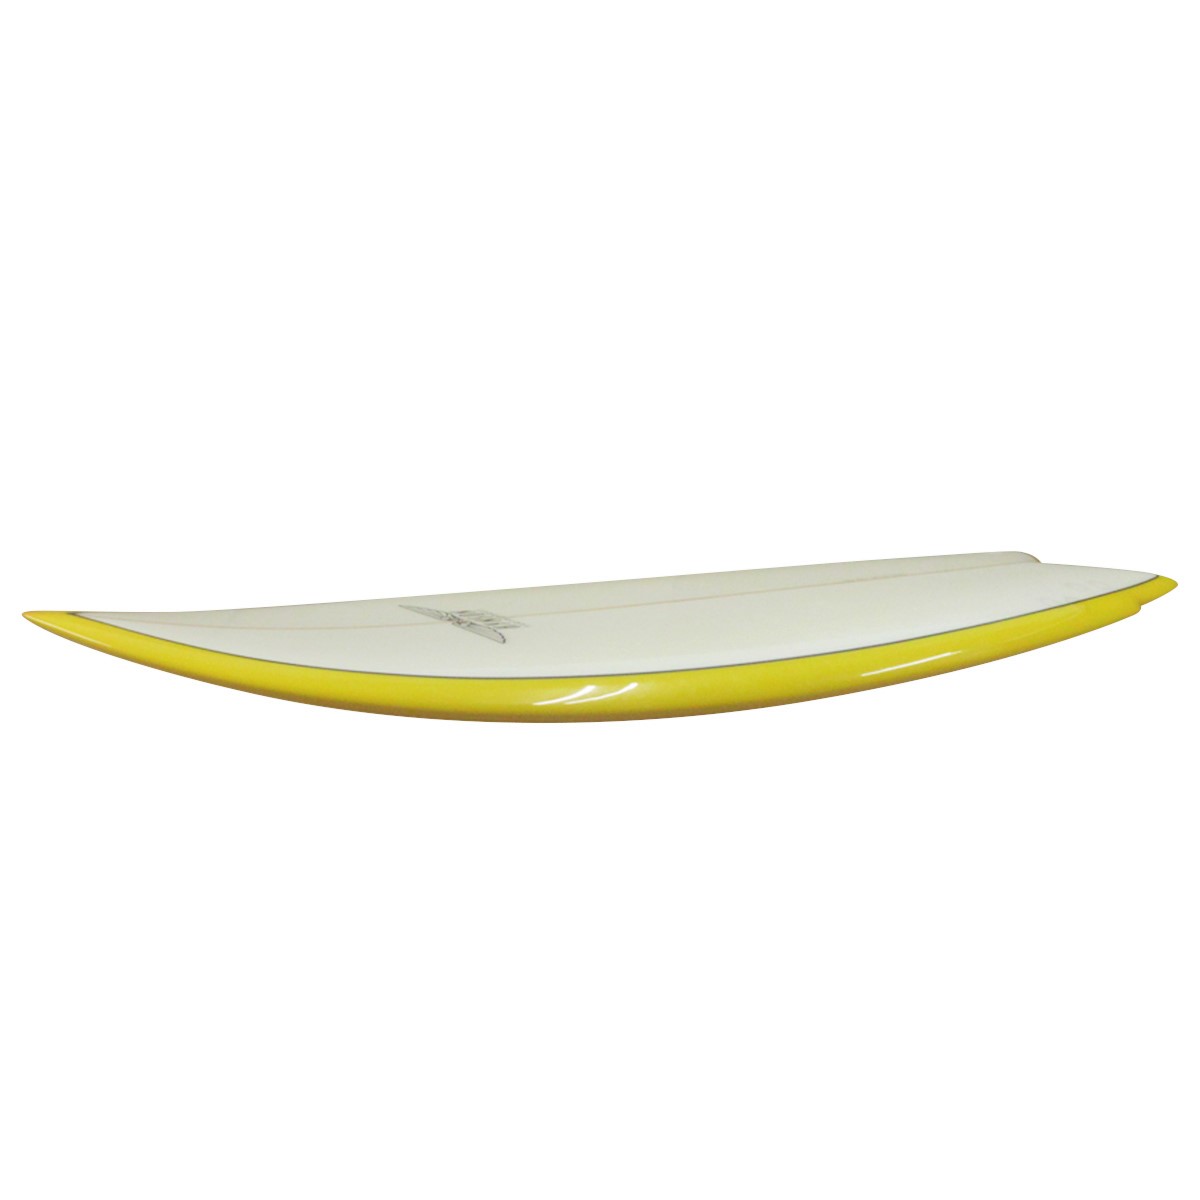 HYNSON SURFBOARDS / BLACK KNIGHT QUAD 5`6 Shaped by MIKE HYNSON